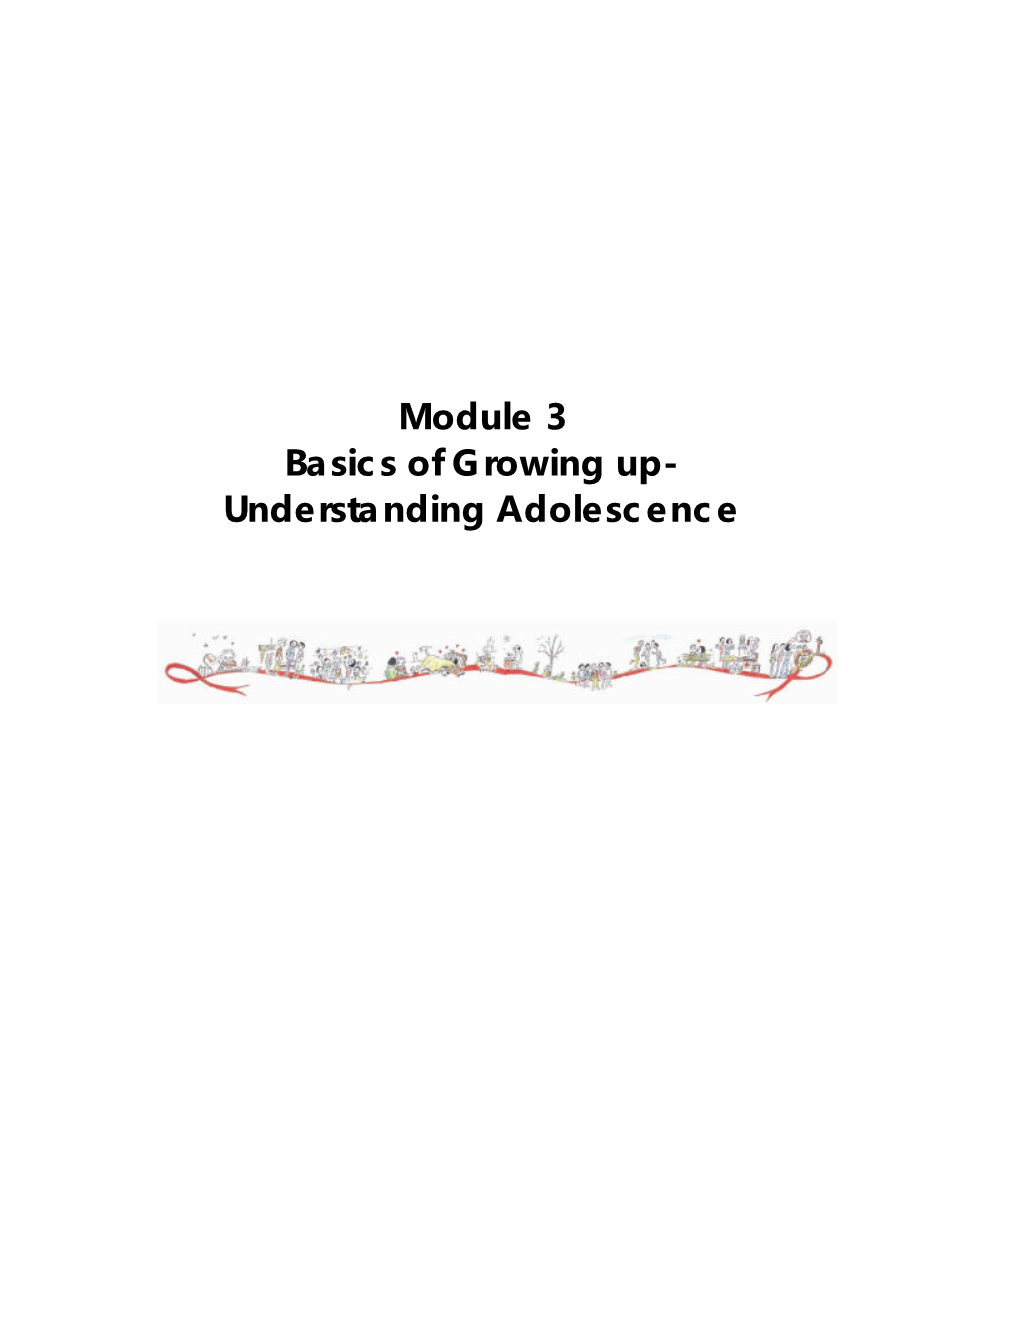 Module 3 Basics of Growing Up- Understanding Adolescence